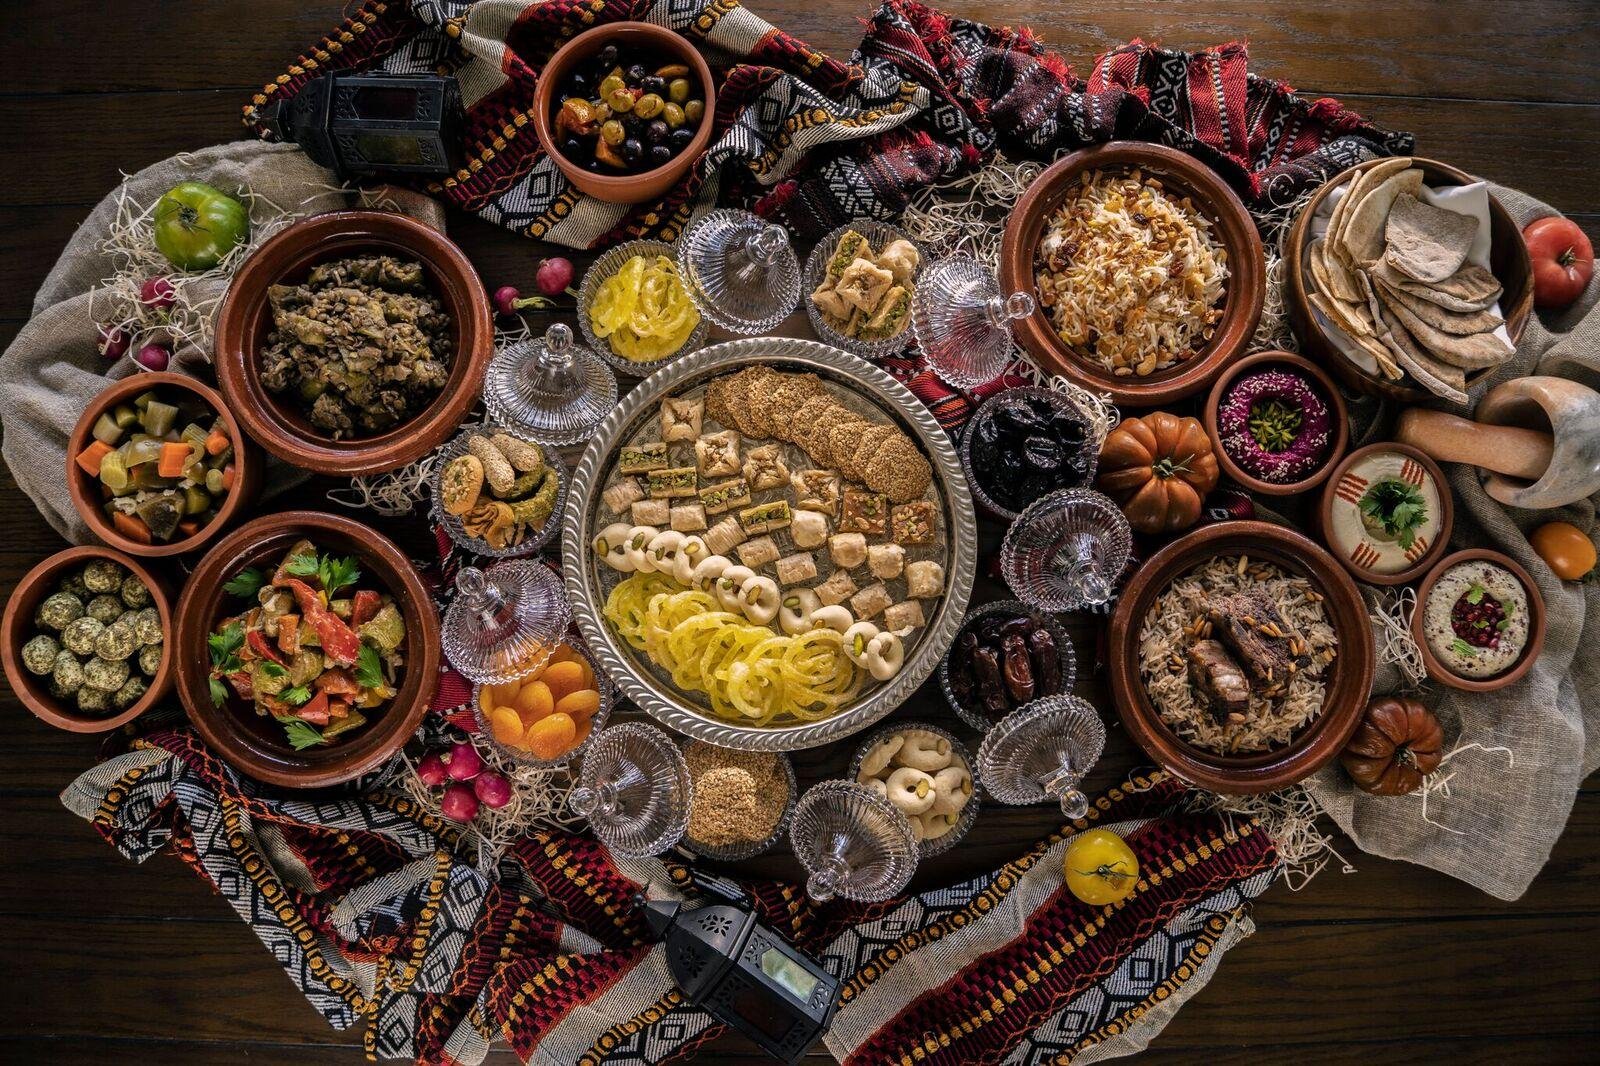 عروض رمضان رمضان 2019 أطباق رمضان دبي